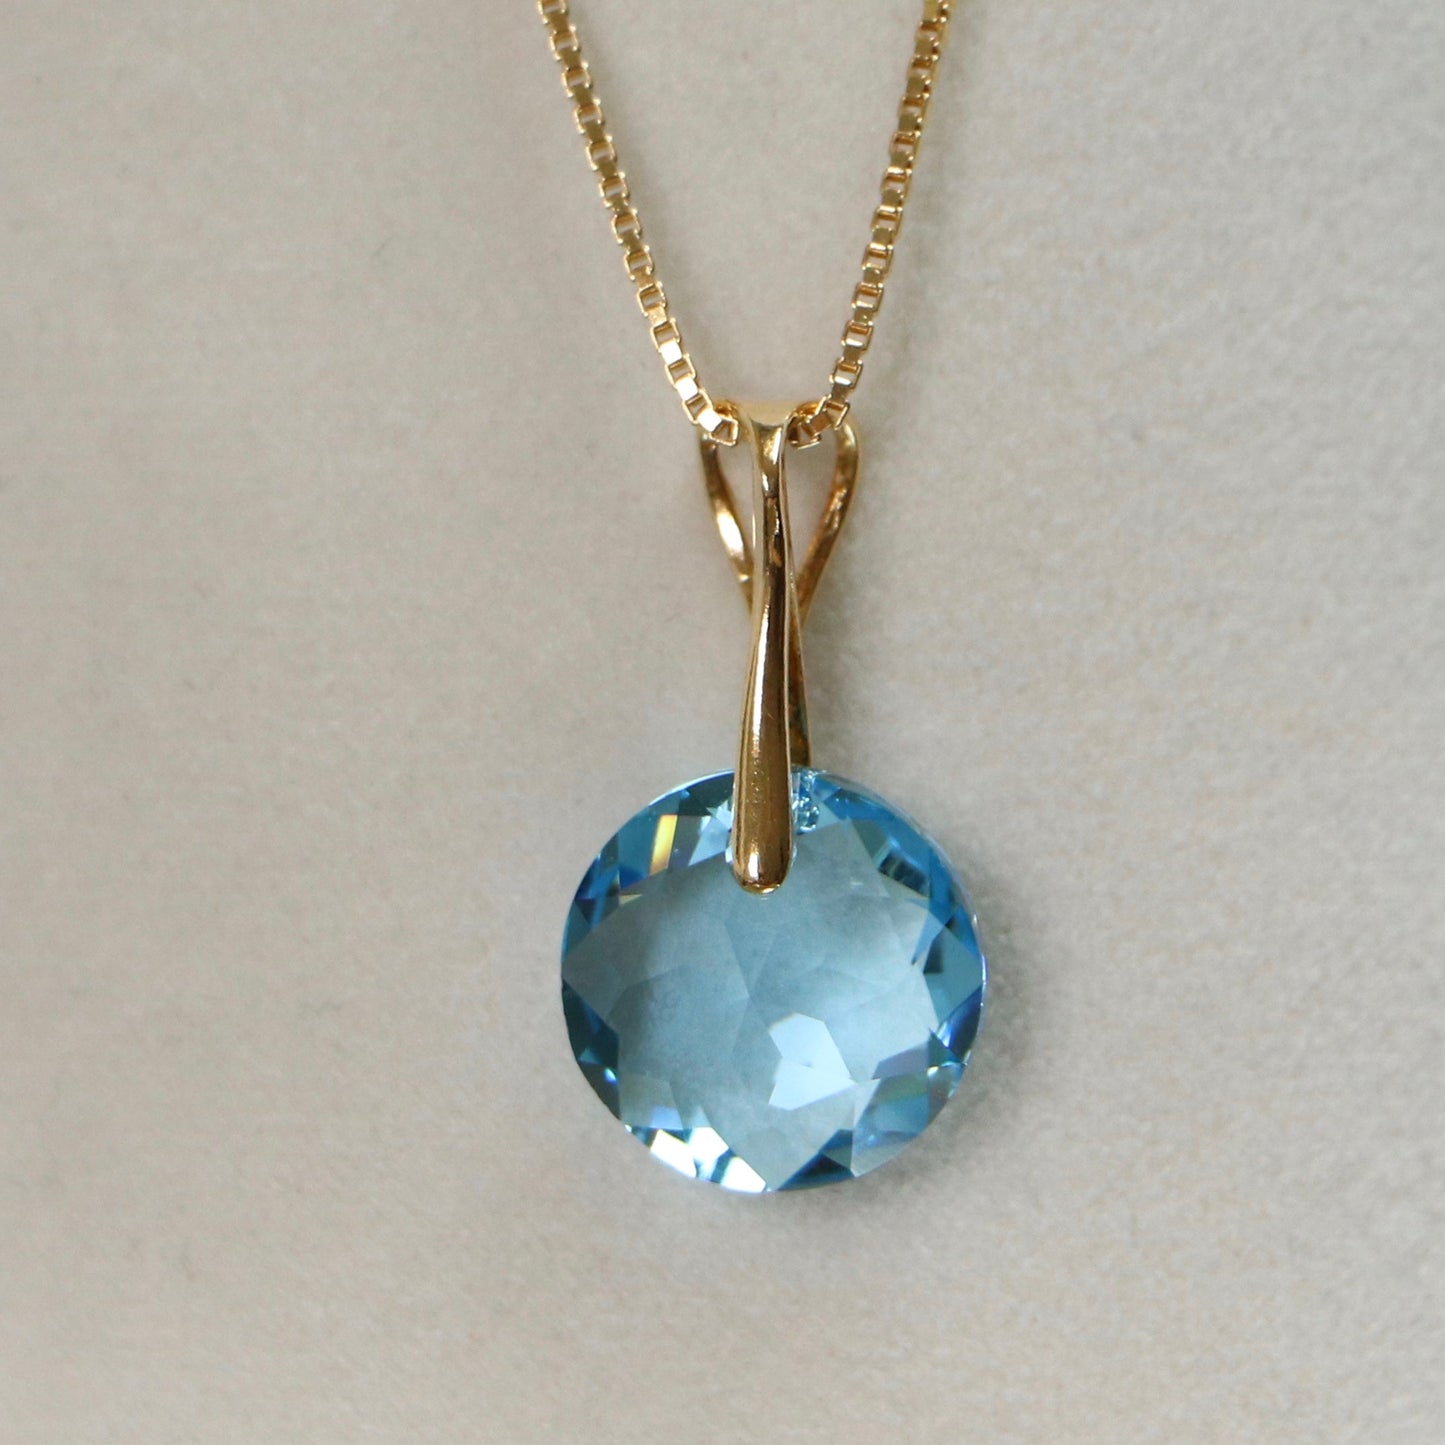 Pendentif, cristaux Swarovski, argent doré, bleu aquamarine, BONBON